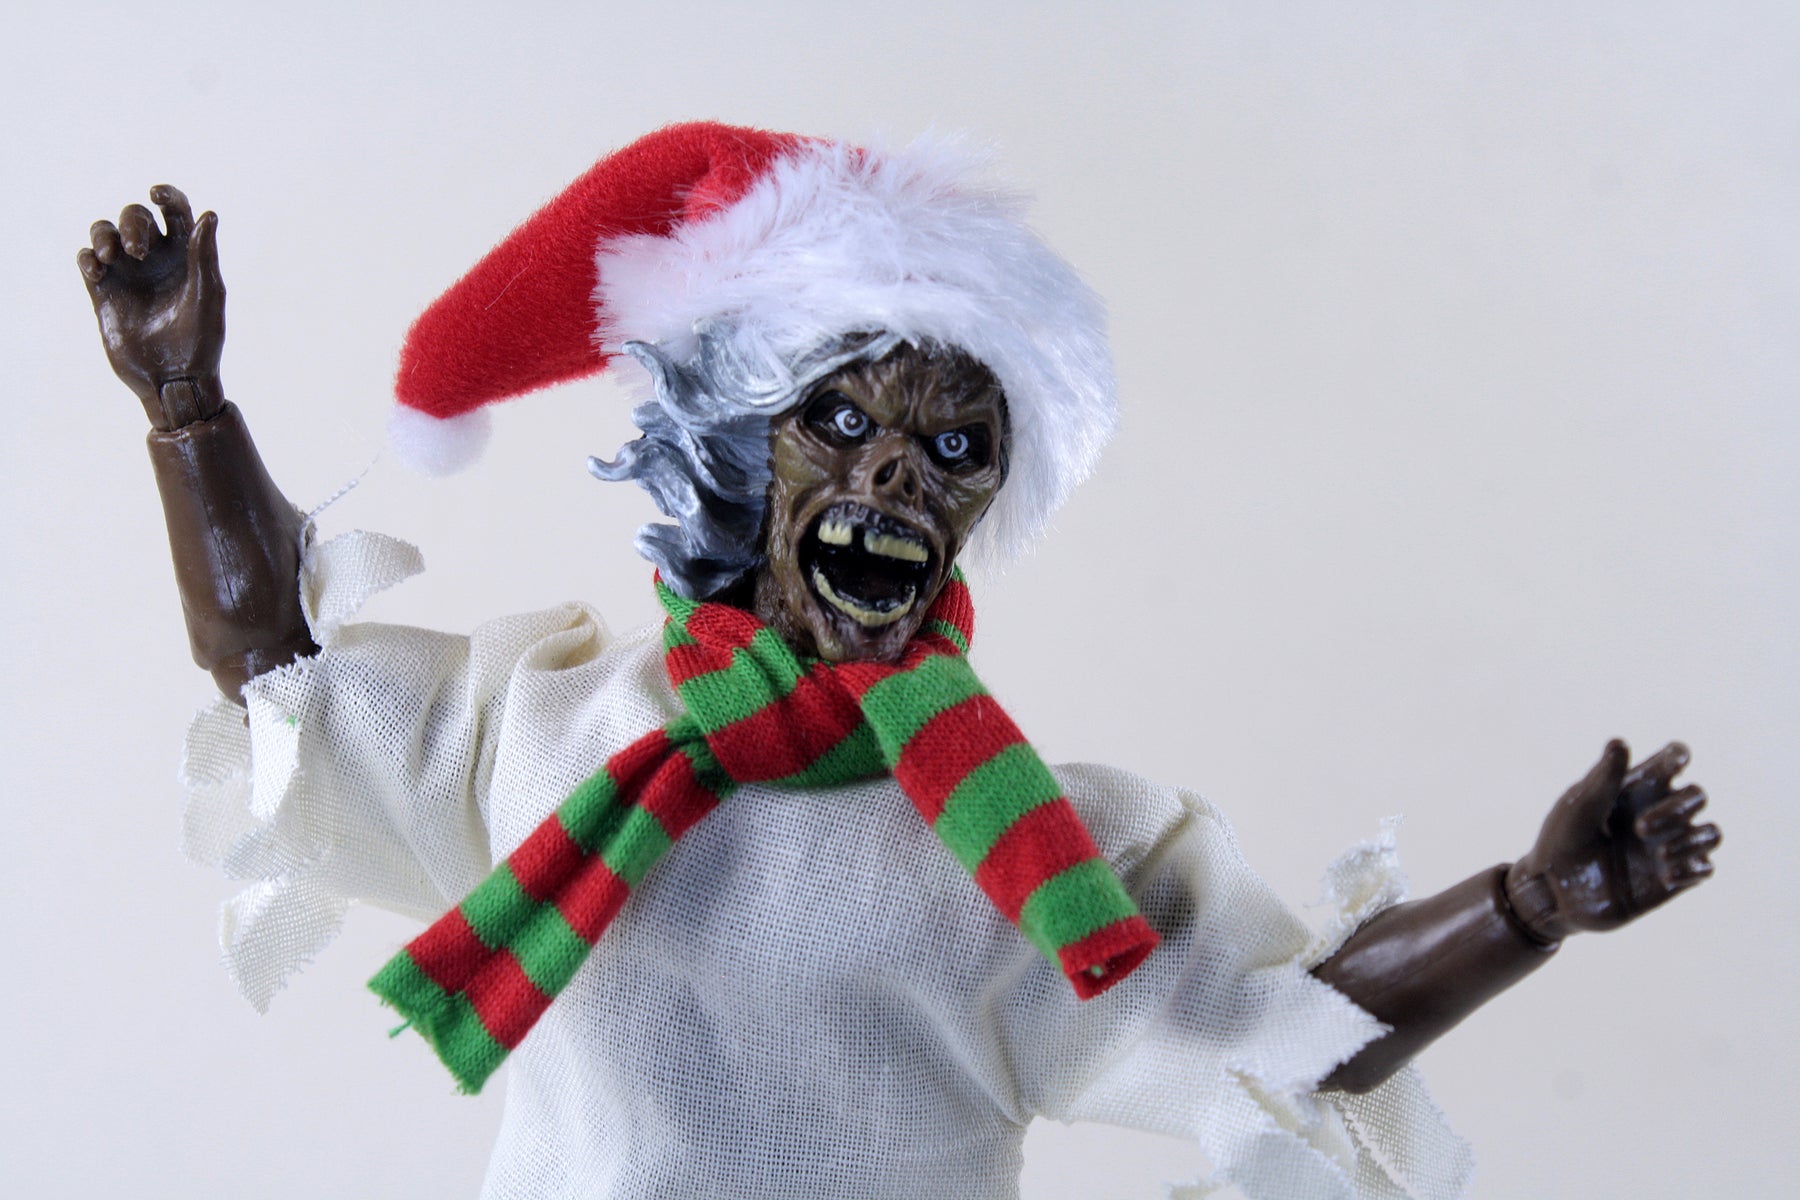 Mego Horror Wave 18 - Creepshow (Christmas Creep) 8" Action Figure